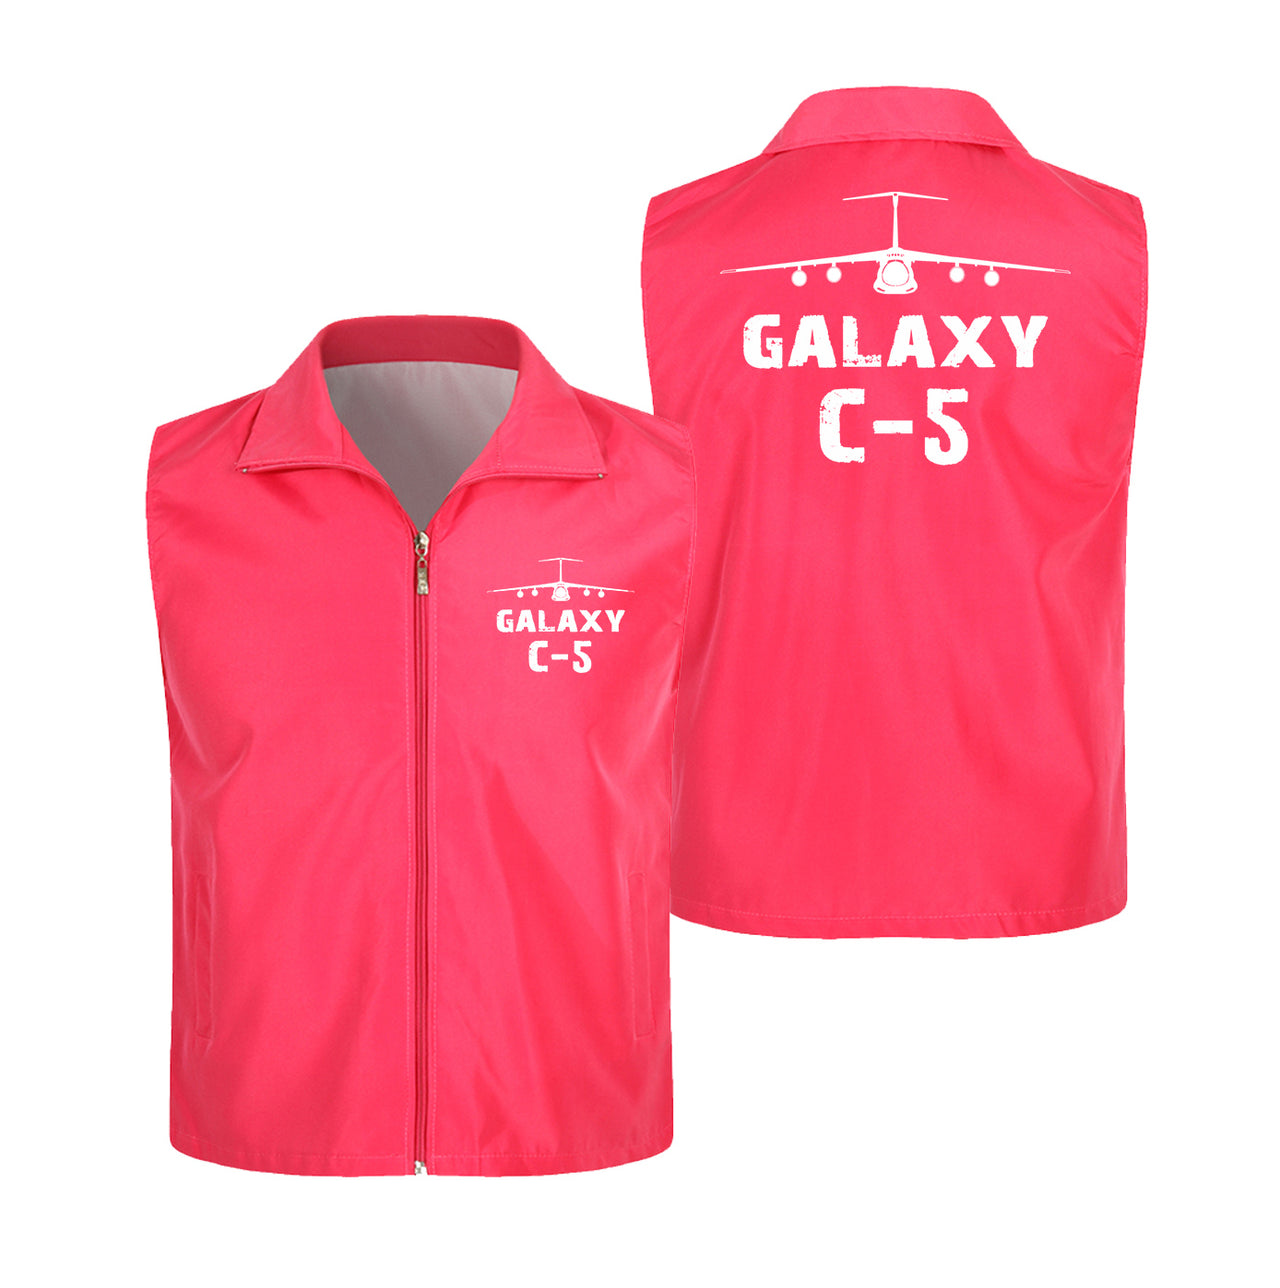 Galaxy C-5 & Plane Designed Thin Style Vests